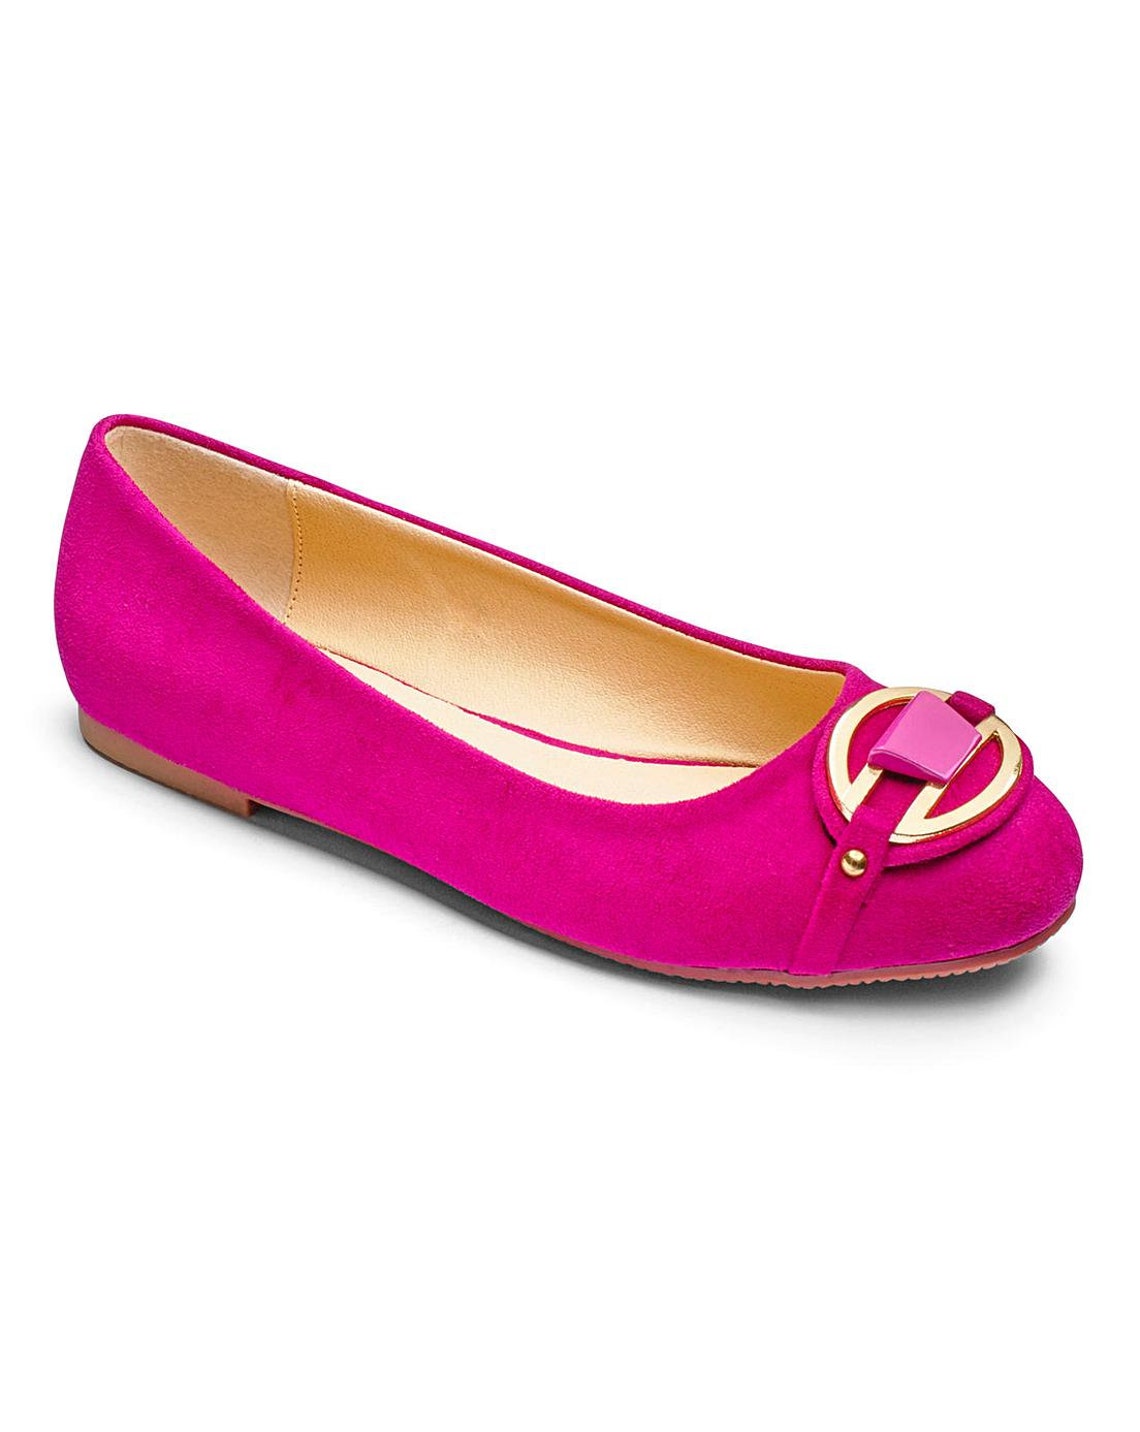 Heavenly Soles Ladies Ballerina Magenta Flat Shoe with Gold | Etsy